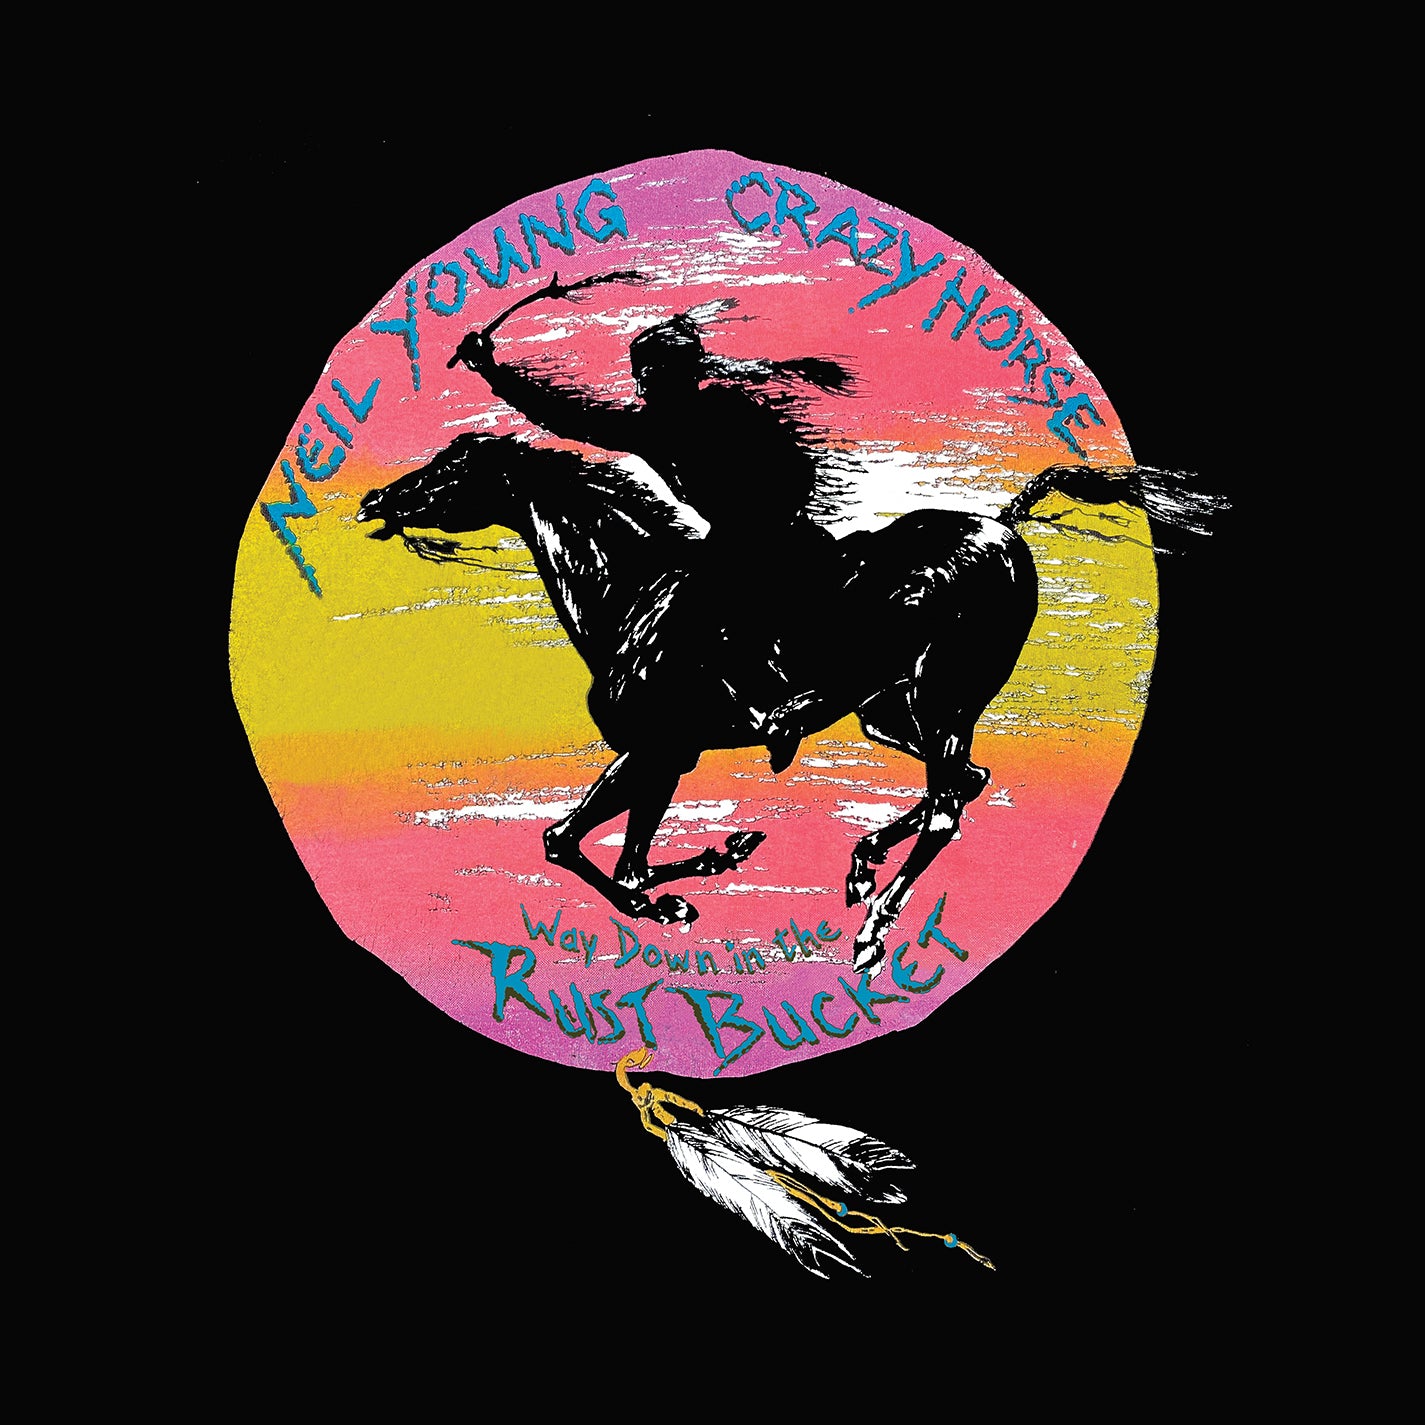 Neil Young & Crazy Horse Way Down In The Rust Bucket Vinyl